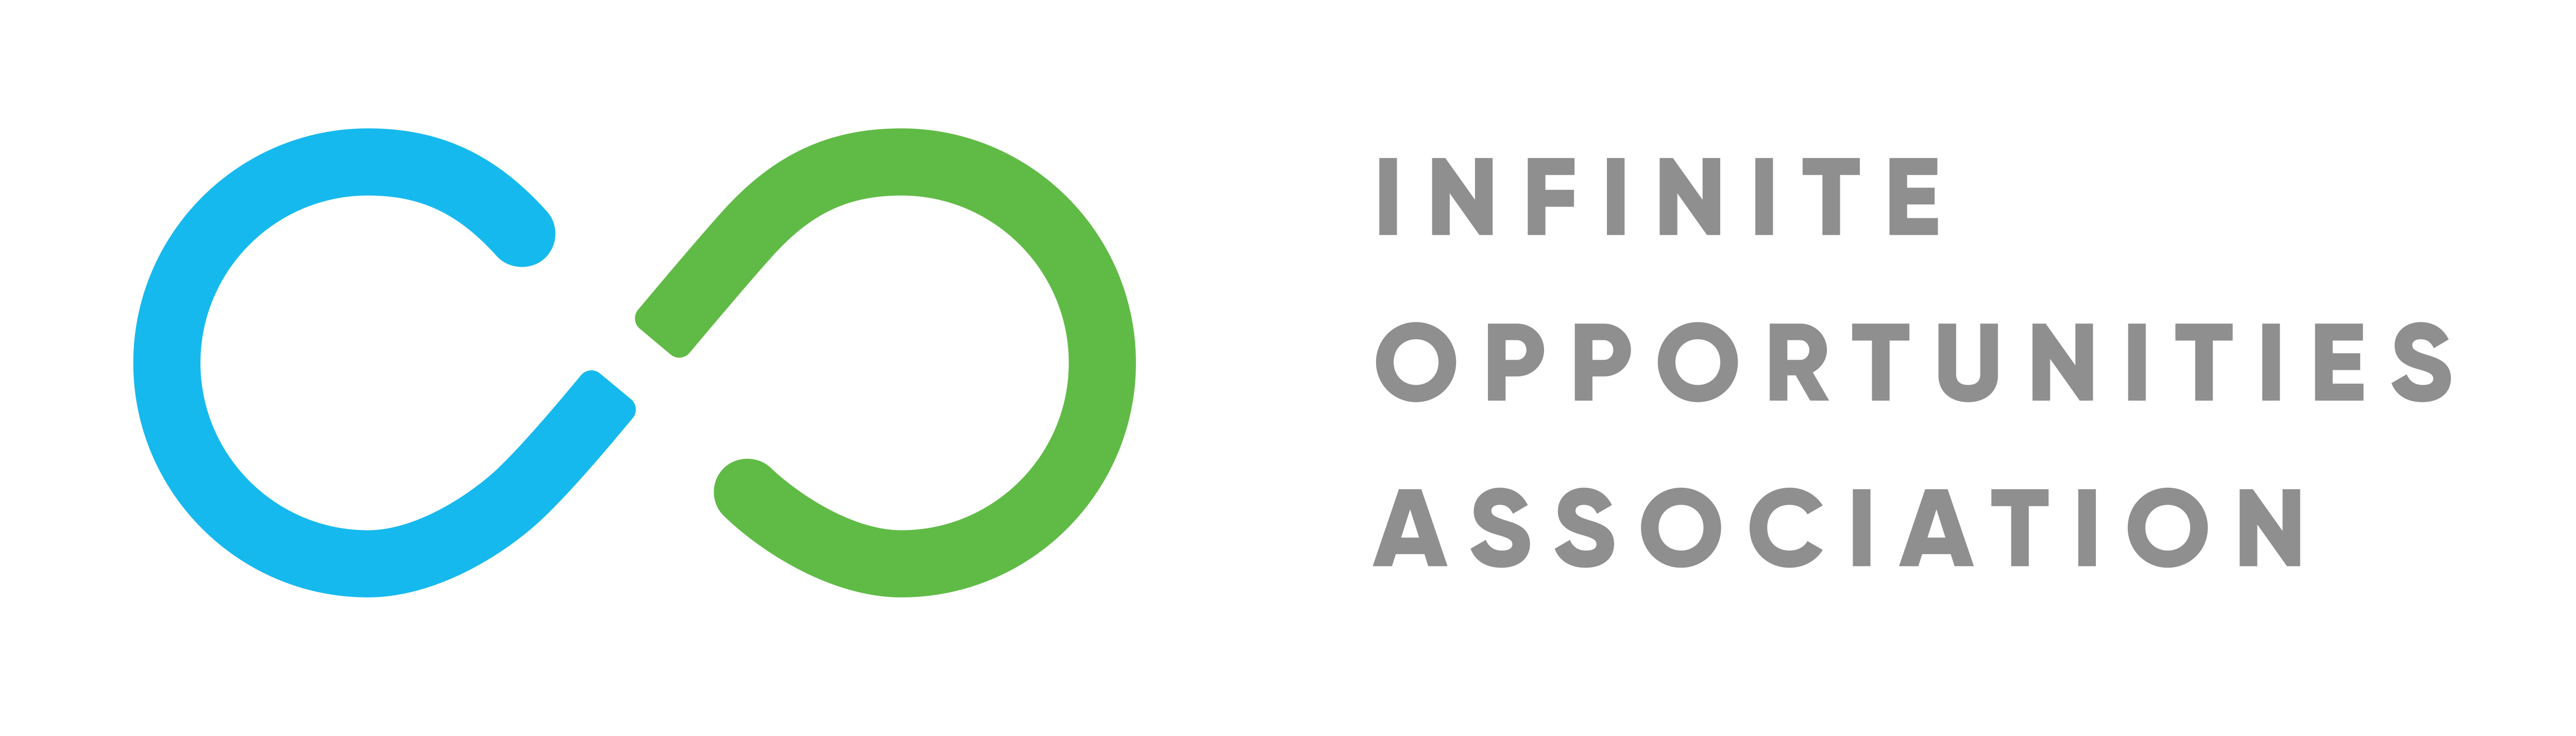 Infinite Opportunities Association